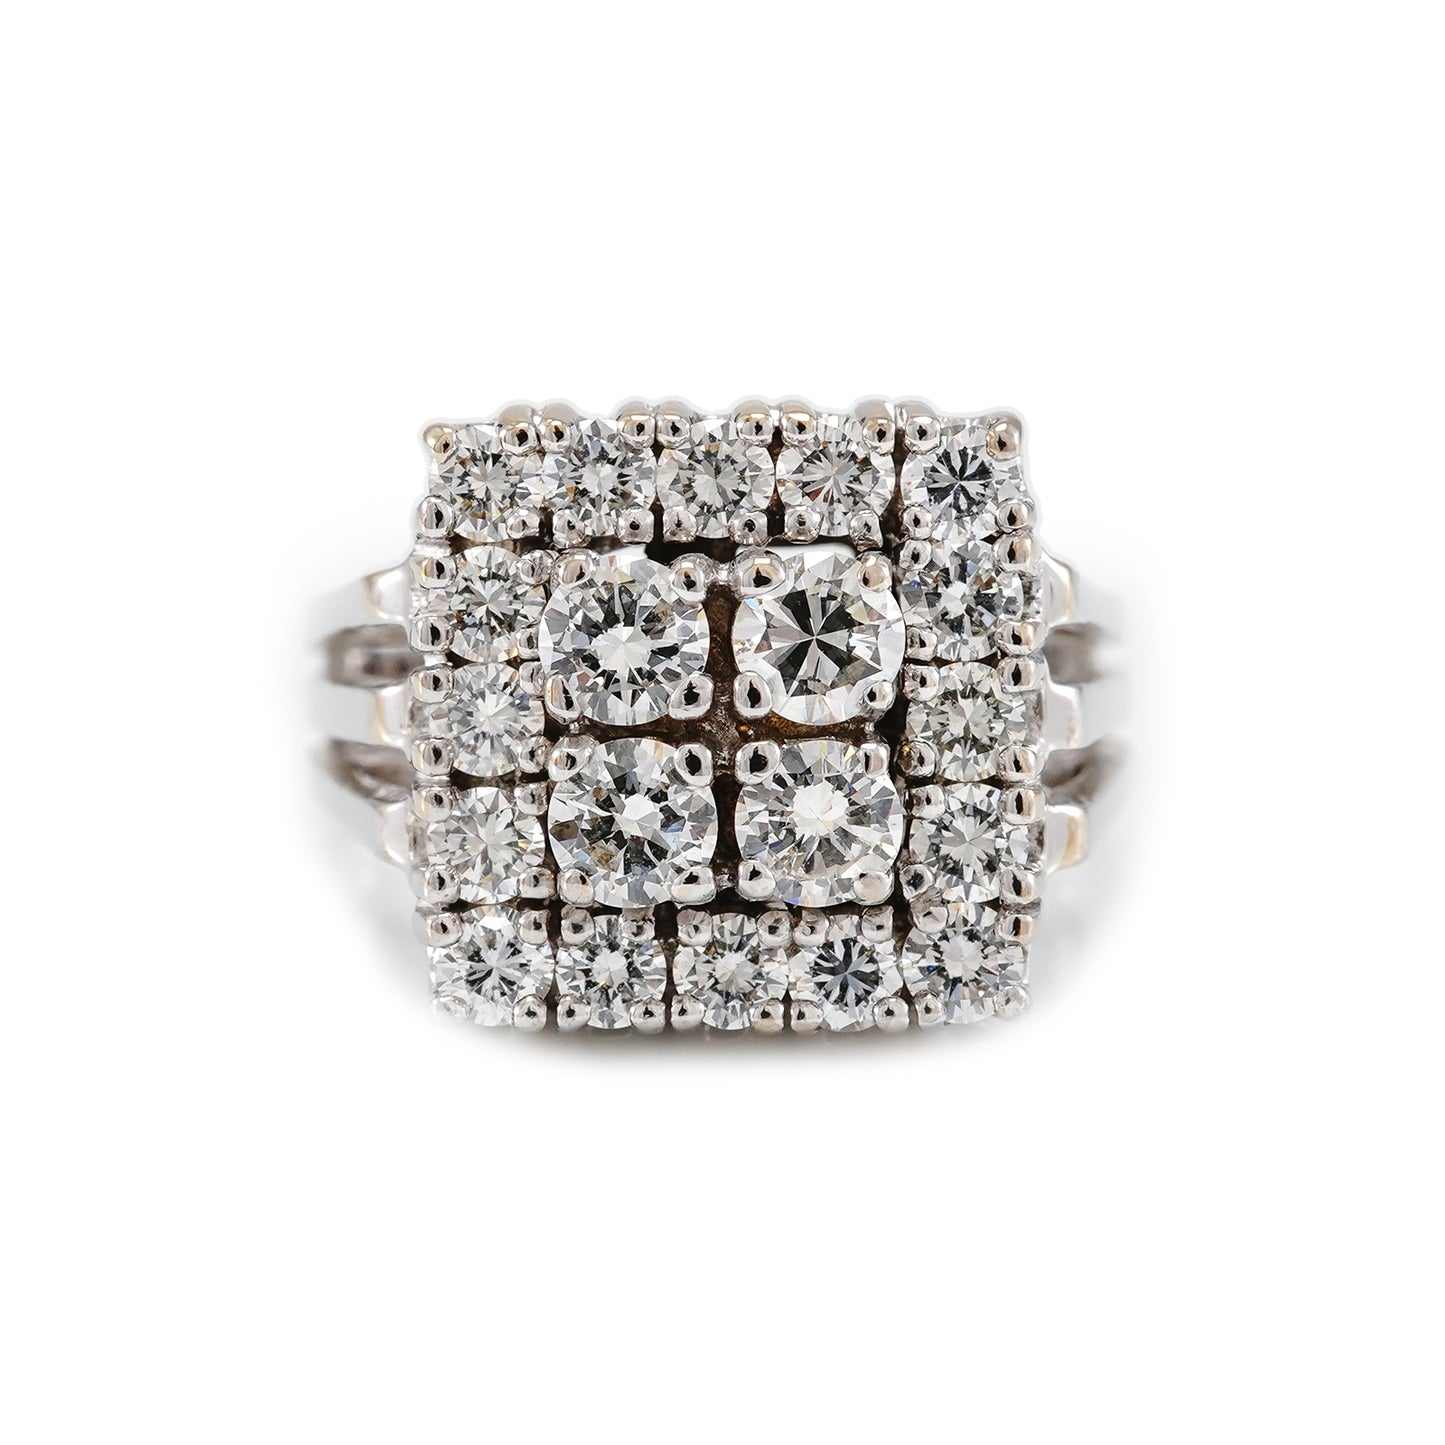 beautiful vintage diamond ring white gold 14K women's jewelry men's jewelry gold ring